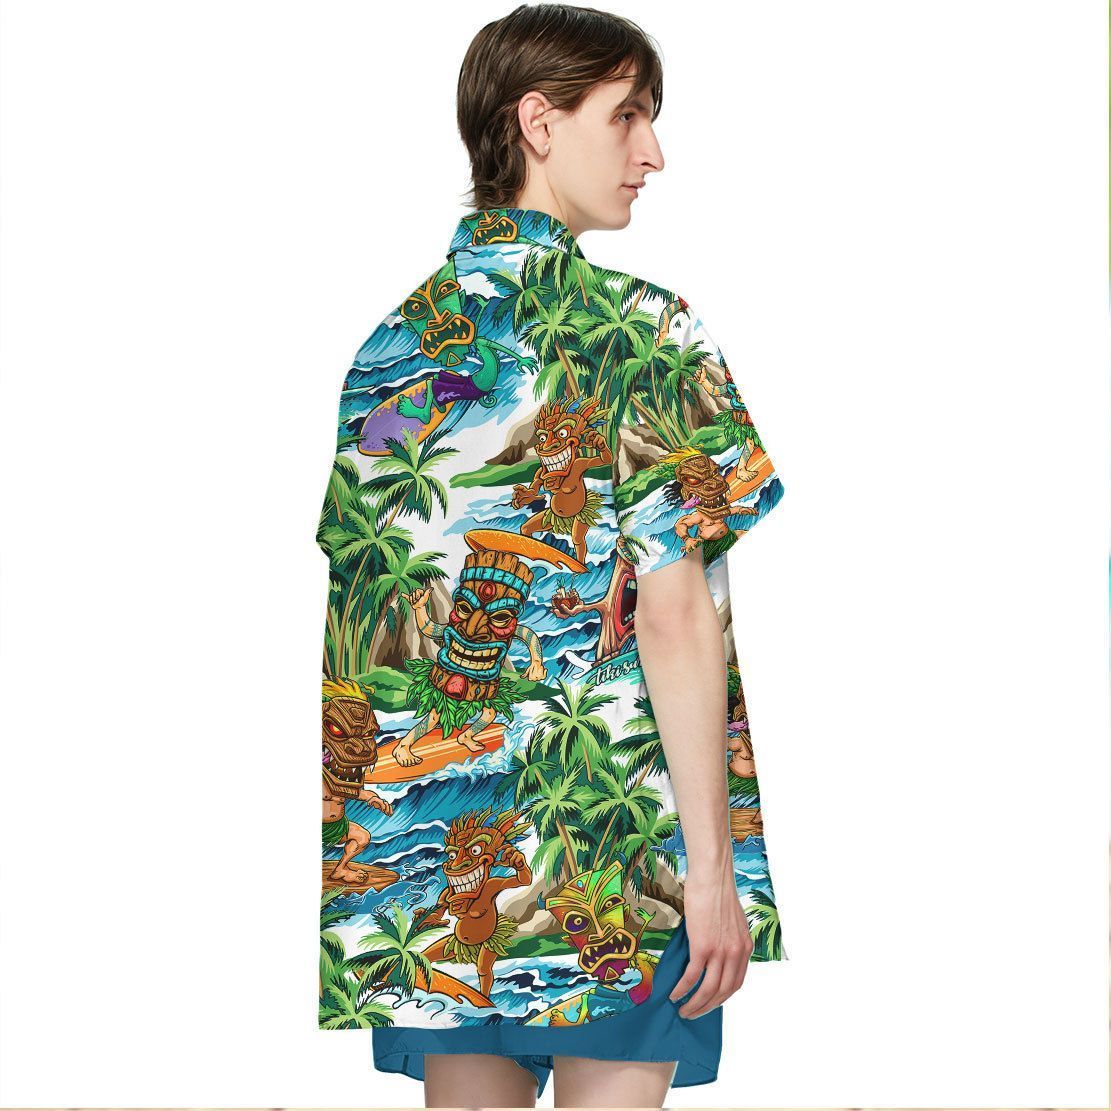 Gearhuman 3D Tiki Tiki Surfing Hawaii Shirt ZZ2506211 Short Sleeve Shirt 